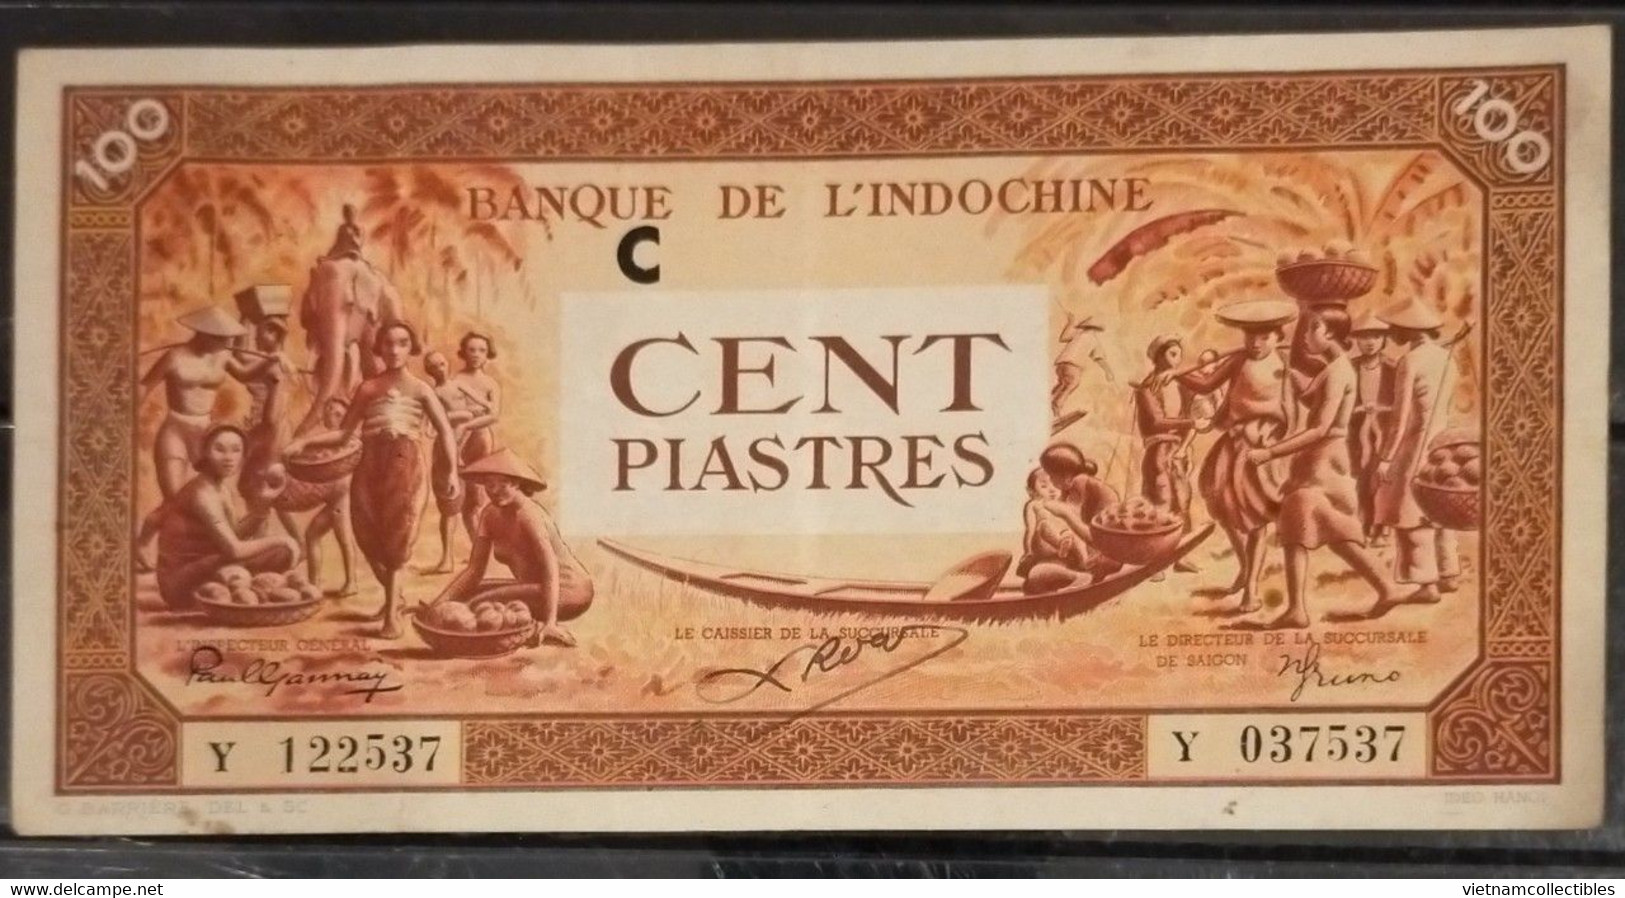 French Indochine Indochina Vietnam Viet Nam Laos Cambodia VF++ 100 Piastres Banknote Note 1942-45 / Pick # 66 - Letter C - Indochine